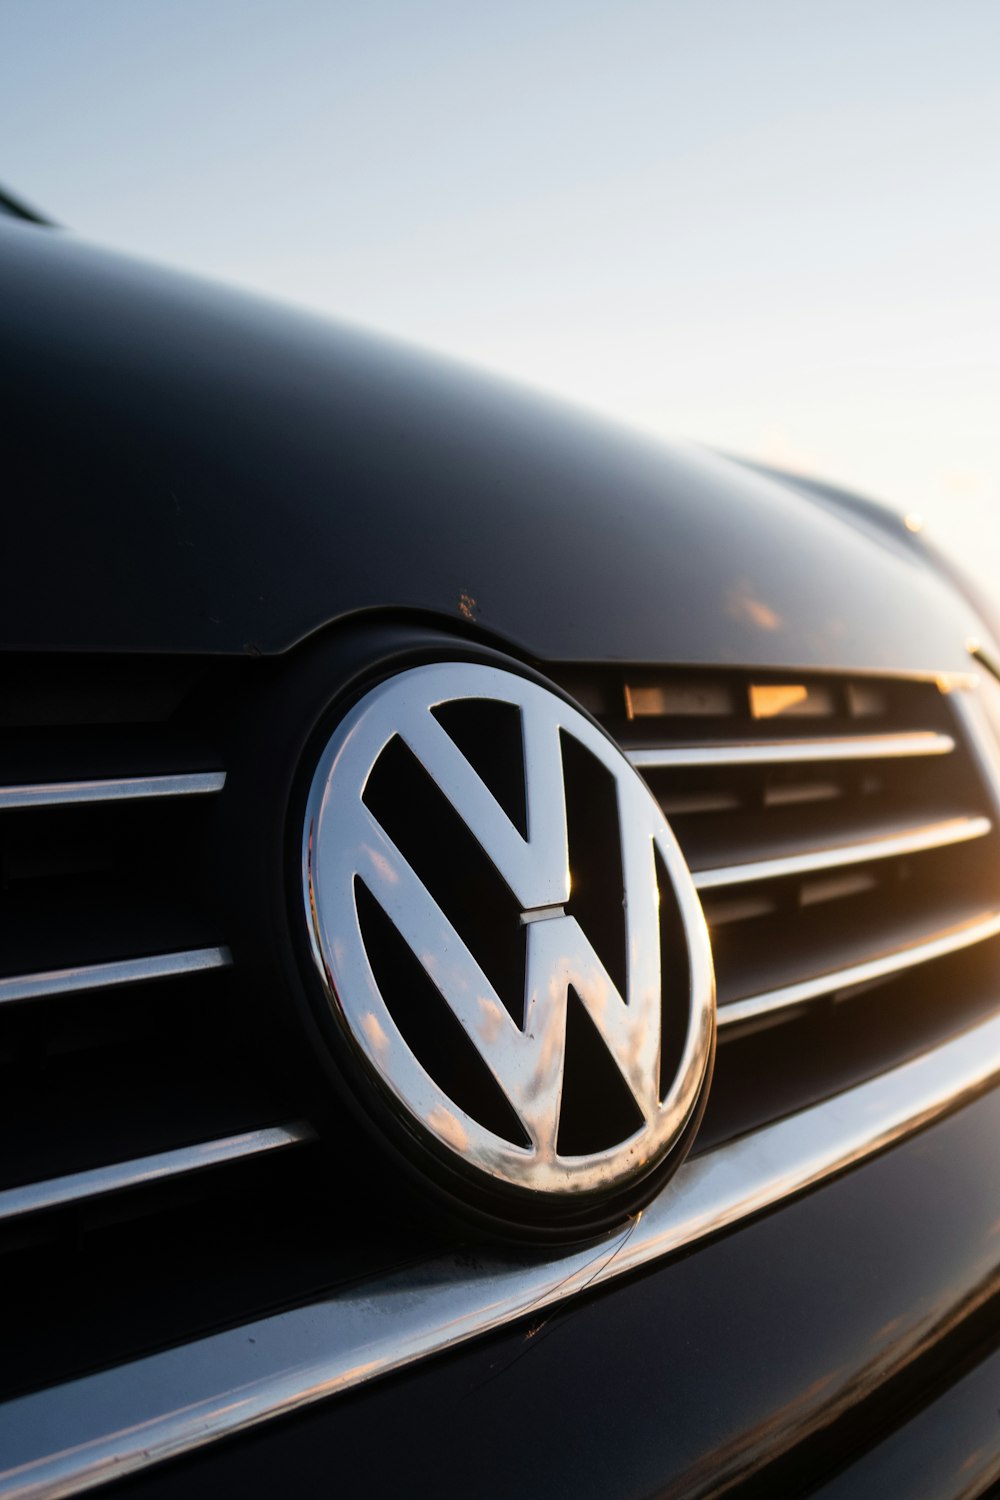 Volkswagen Logo Pictures | Download Free Images on Unsplash